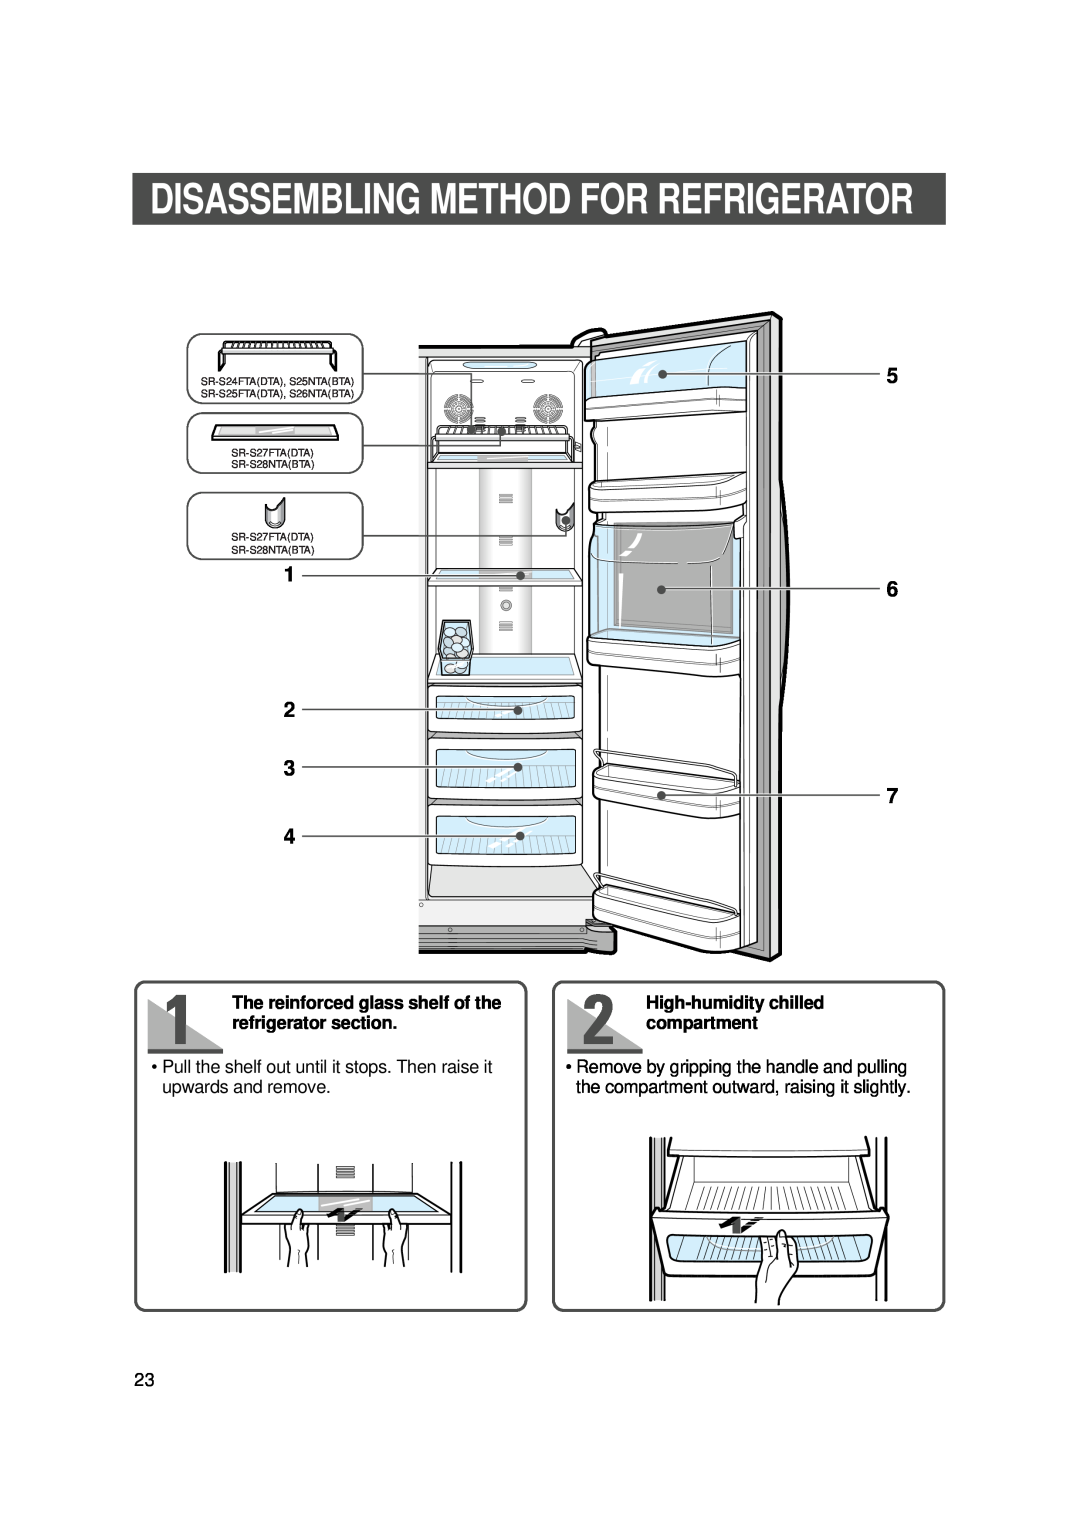 Samsung SR-S28BTA, SR-S27DTA Disassembling Method For Refrigerator, The reinforced glass shelf of the refrigerator section 